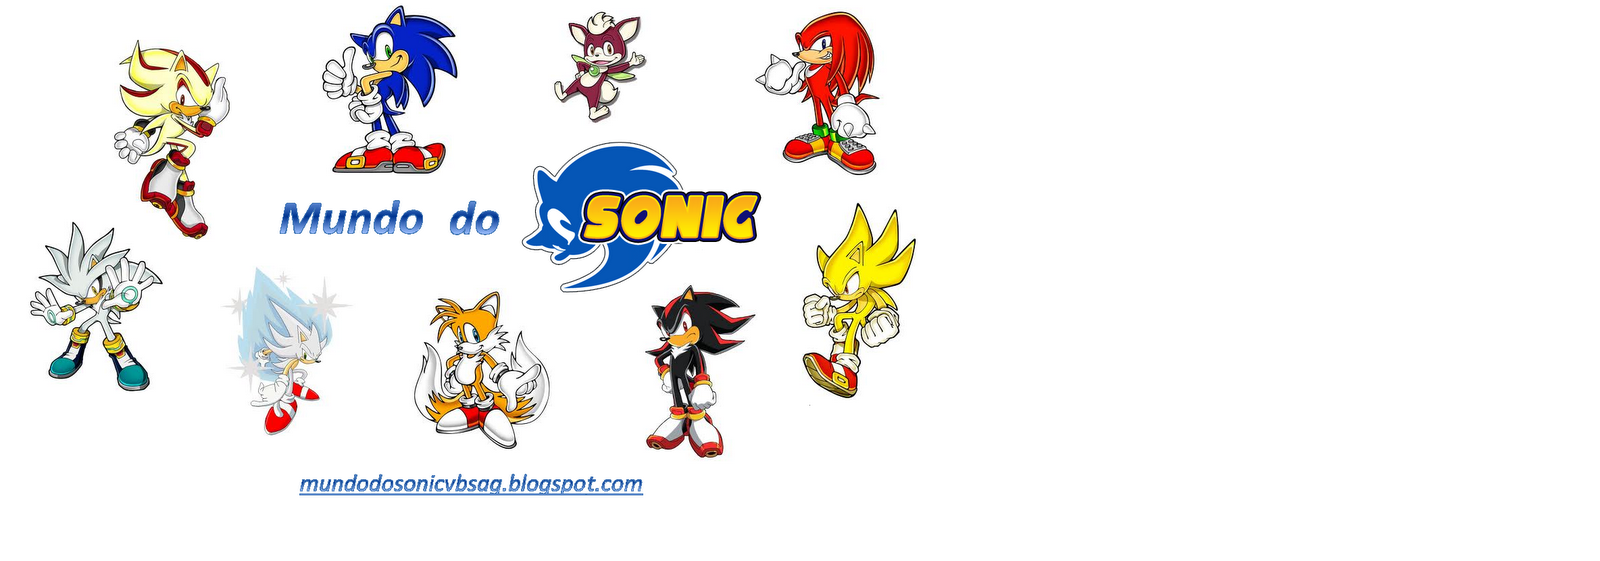 Mundo do Sonic